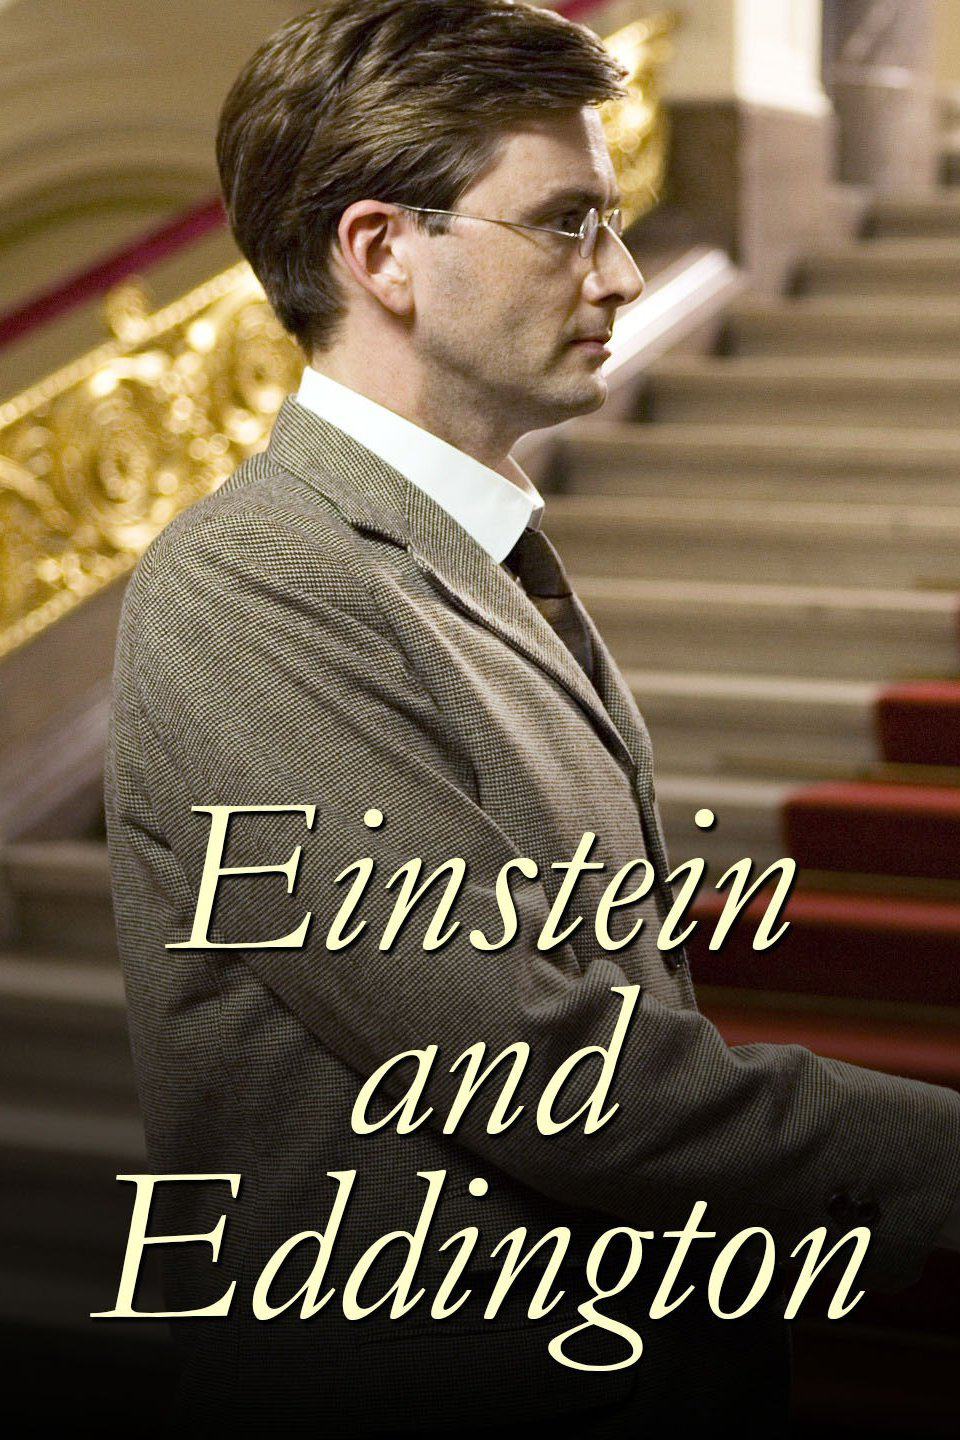 movie einstein and eddington